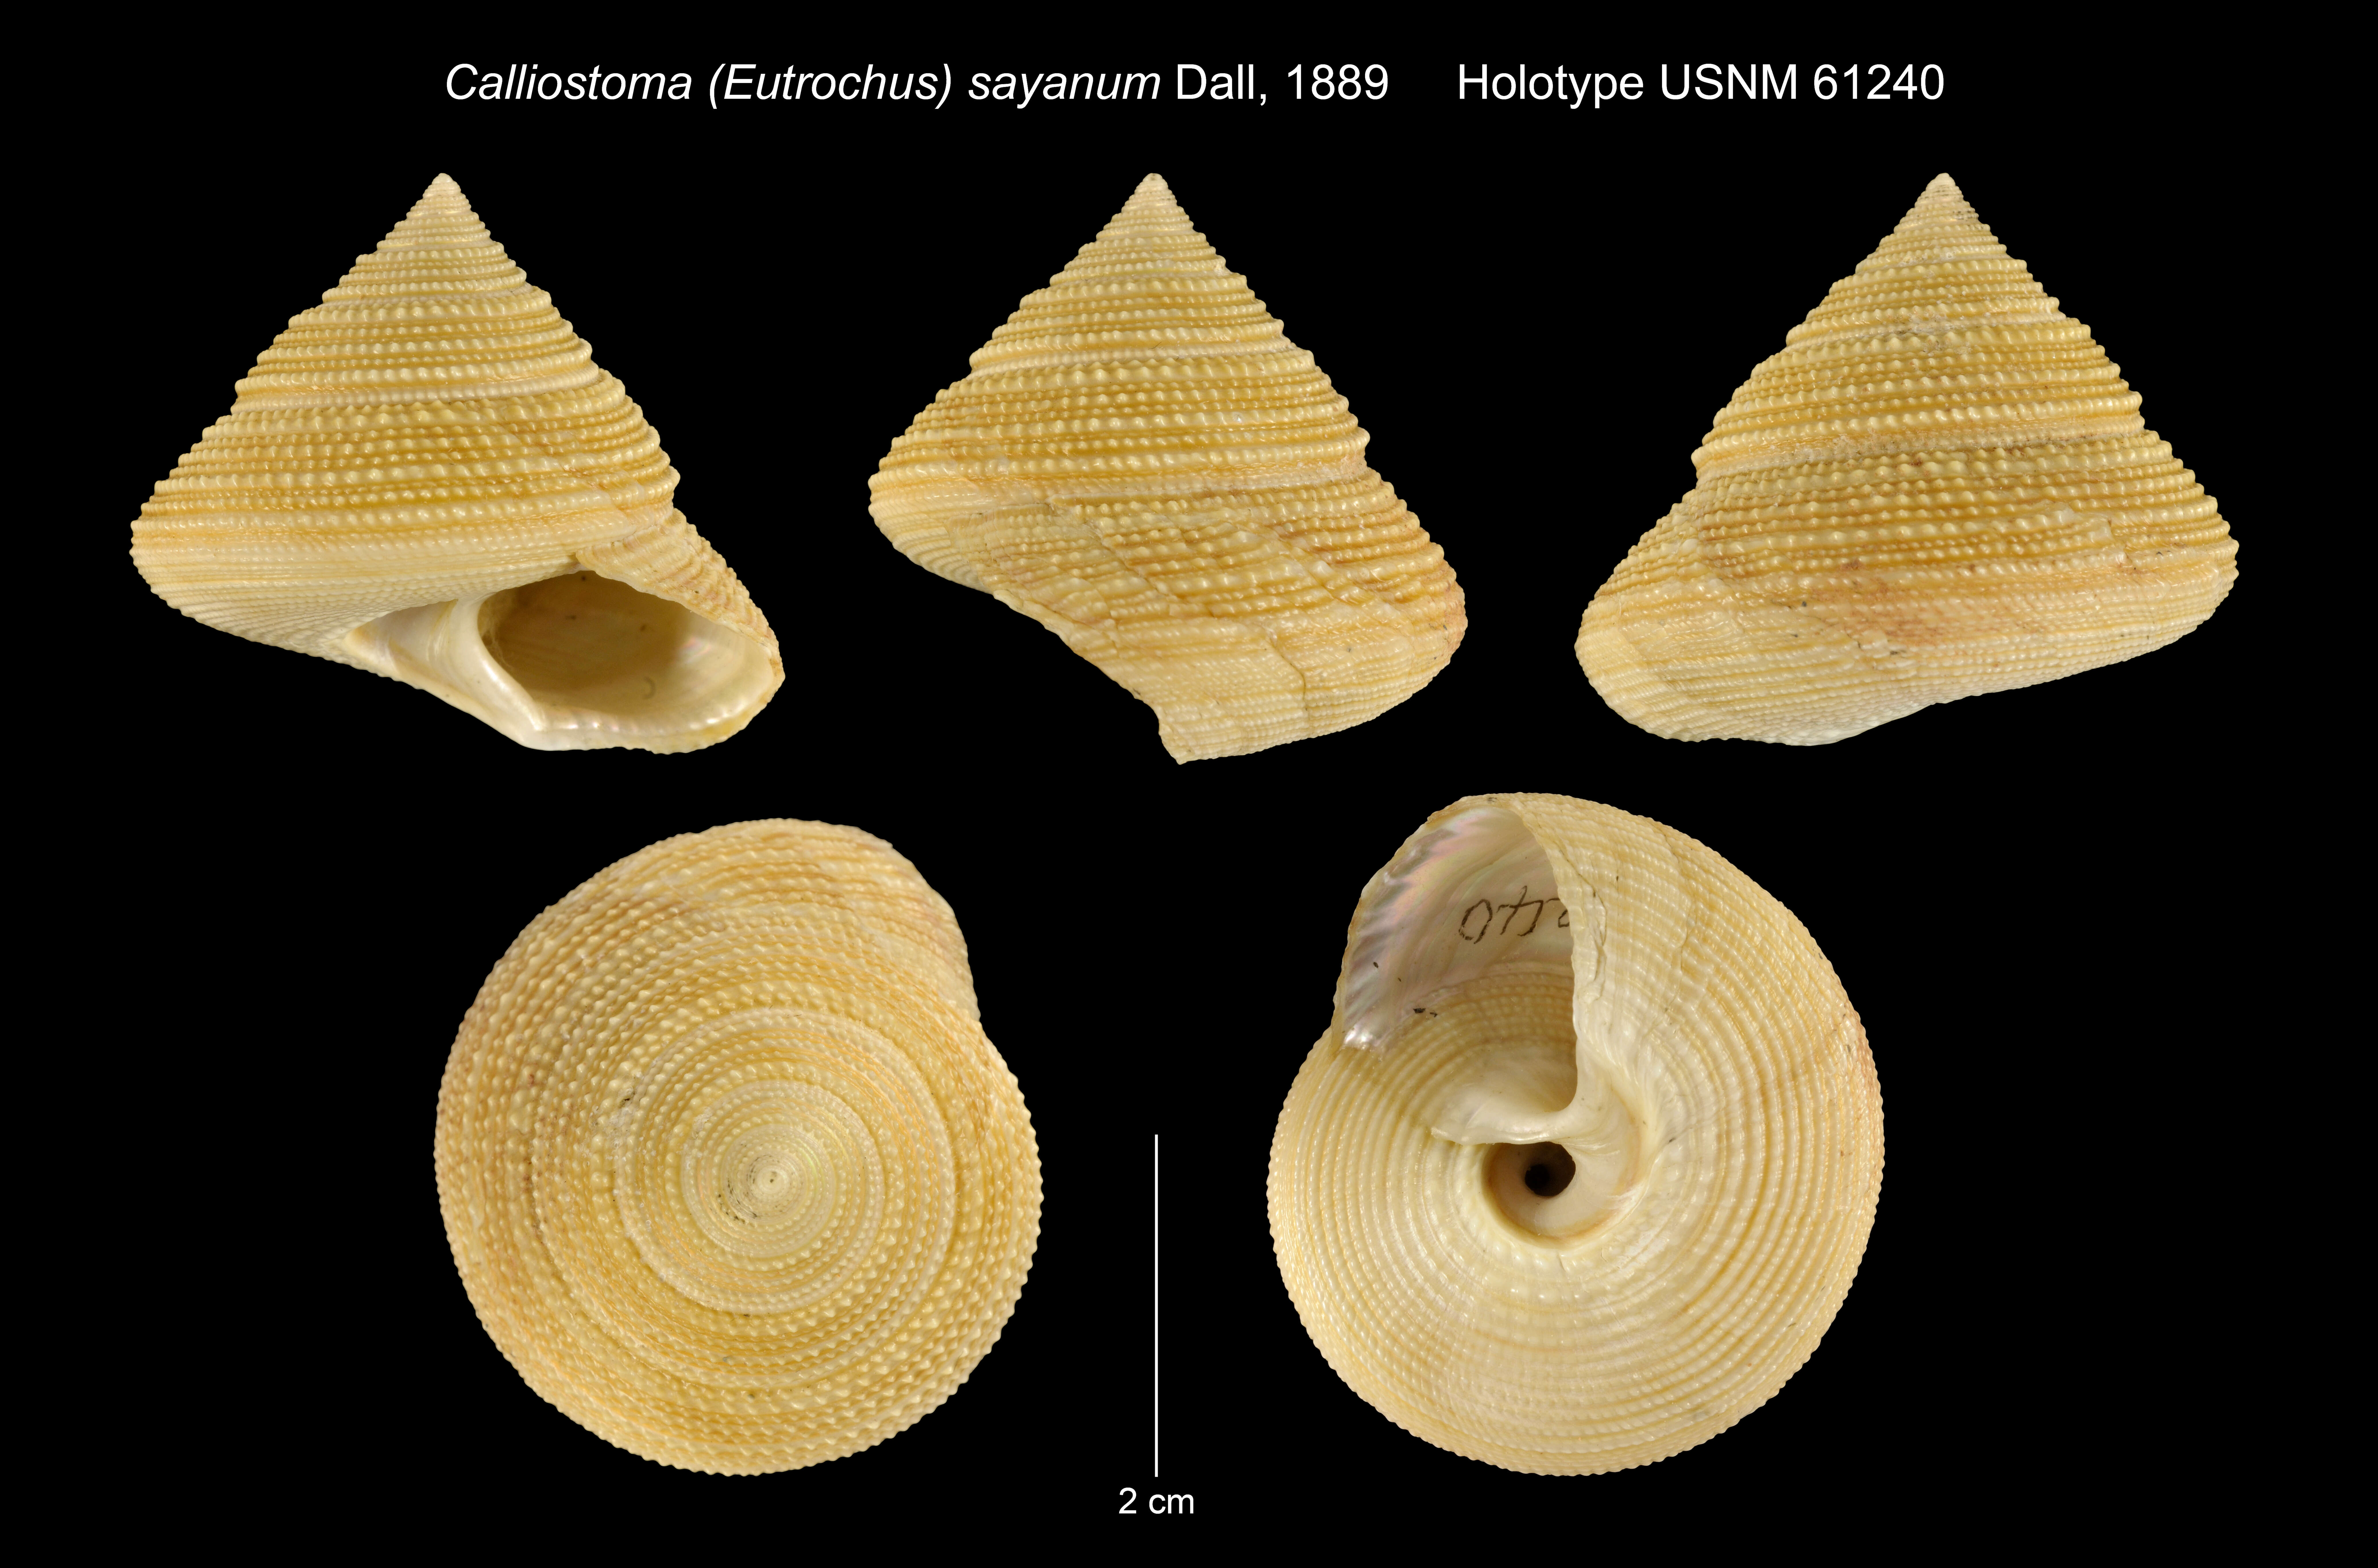 Image of Calliostoma sayanum Dall 1889